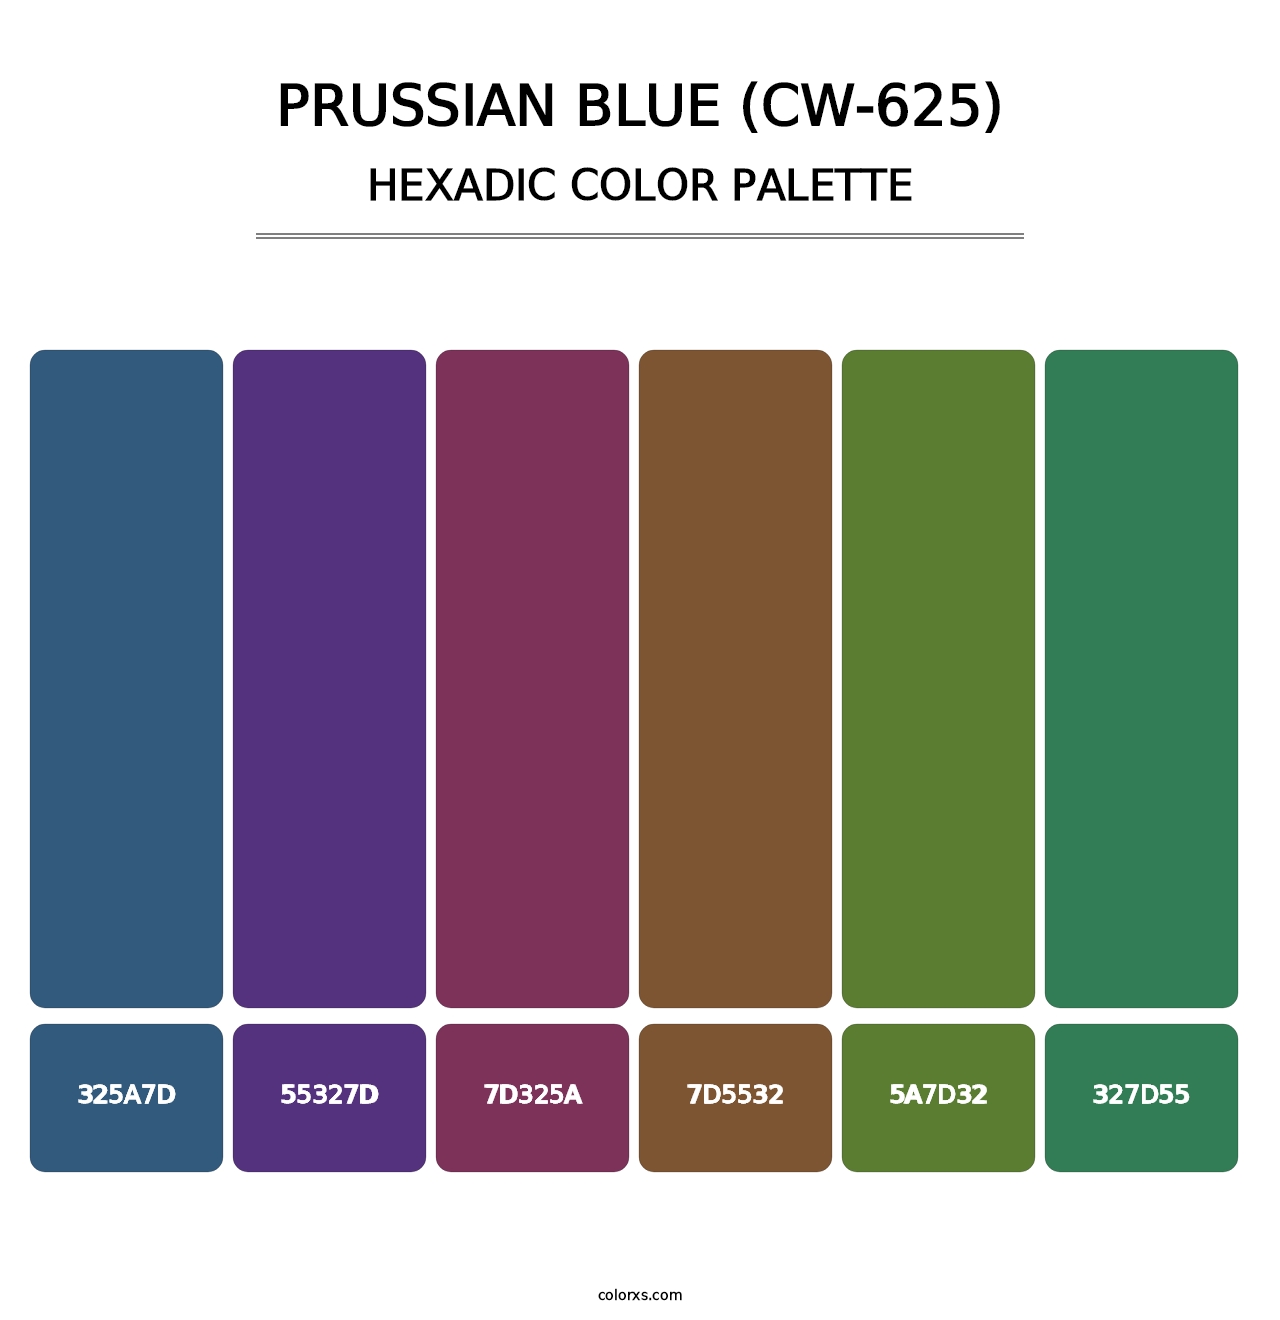 Prussian Blue (CW-625) - Hexadic Color Palette